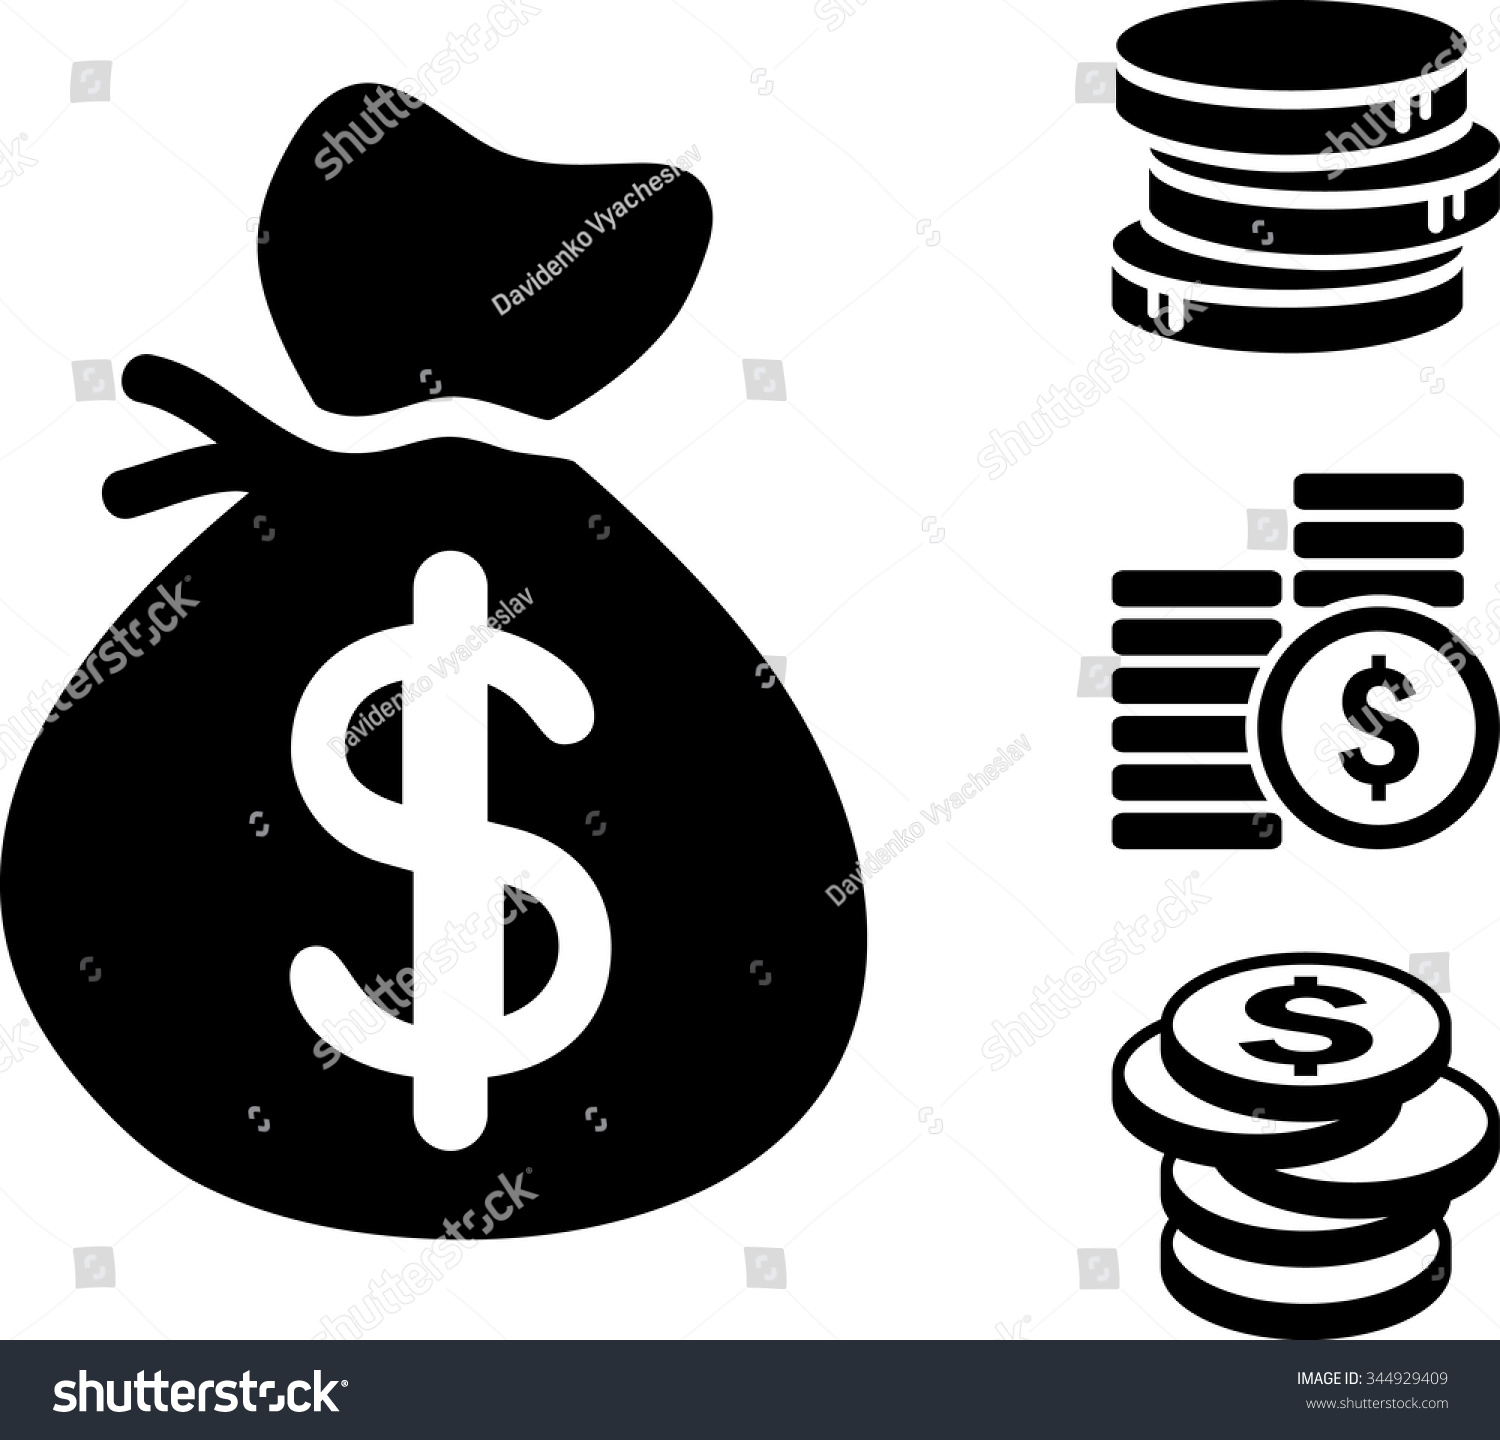 Money Graphic Design Vector Illustration Eps10 Stock Vector 344929409